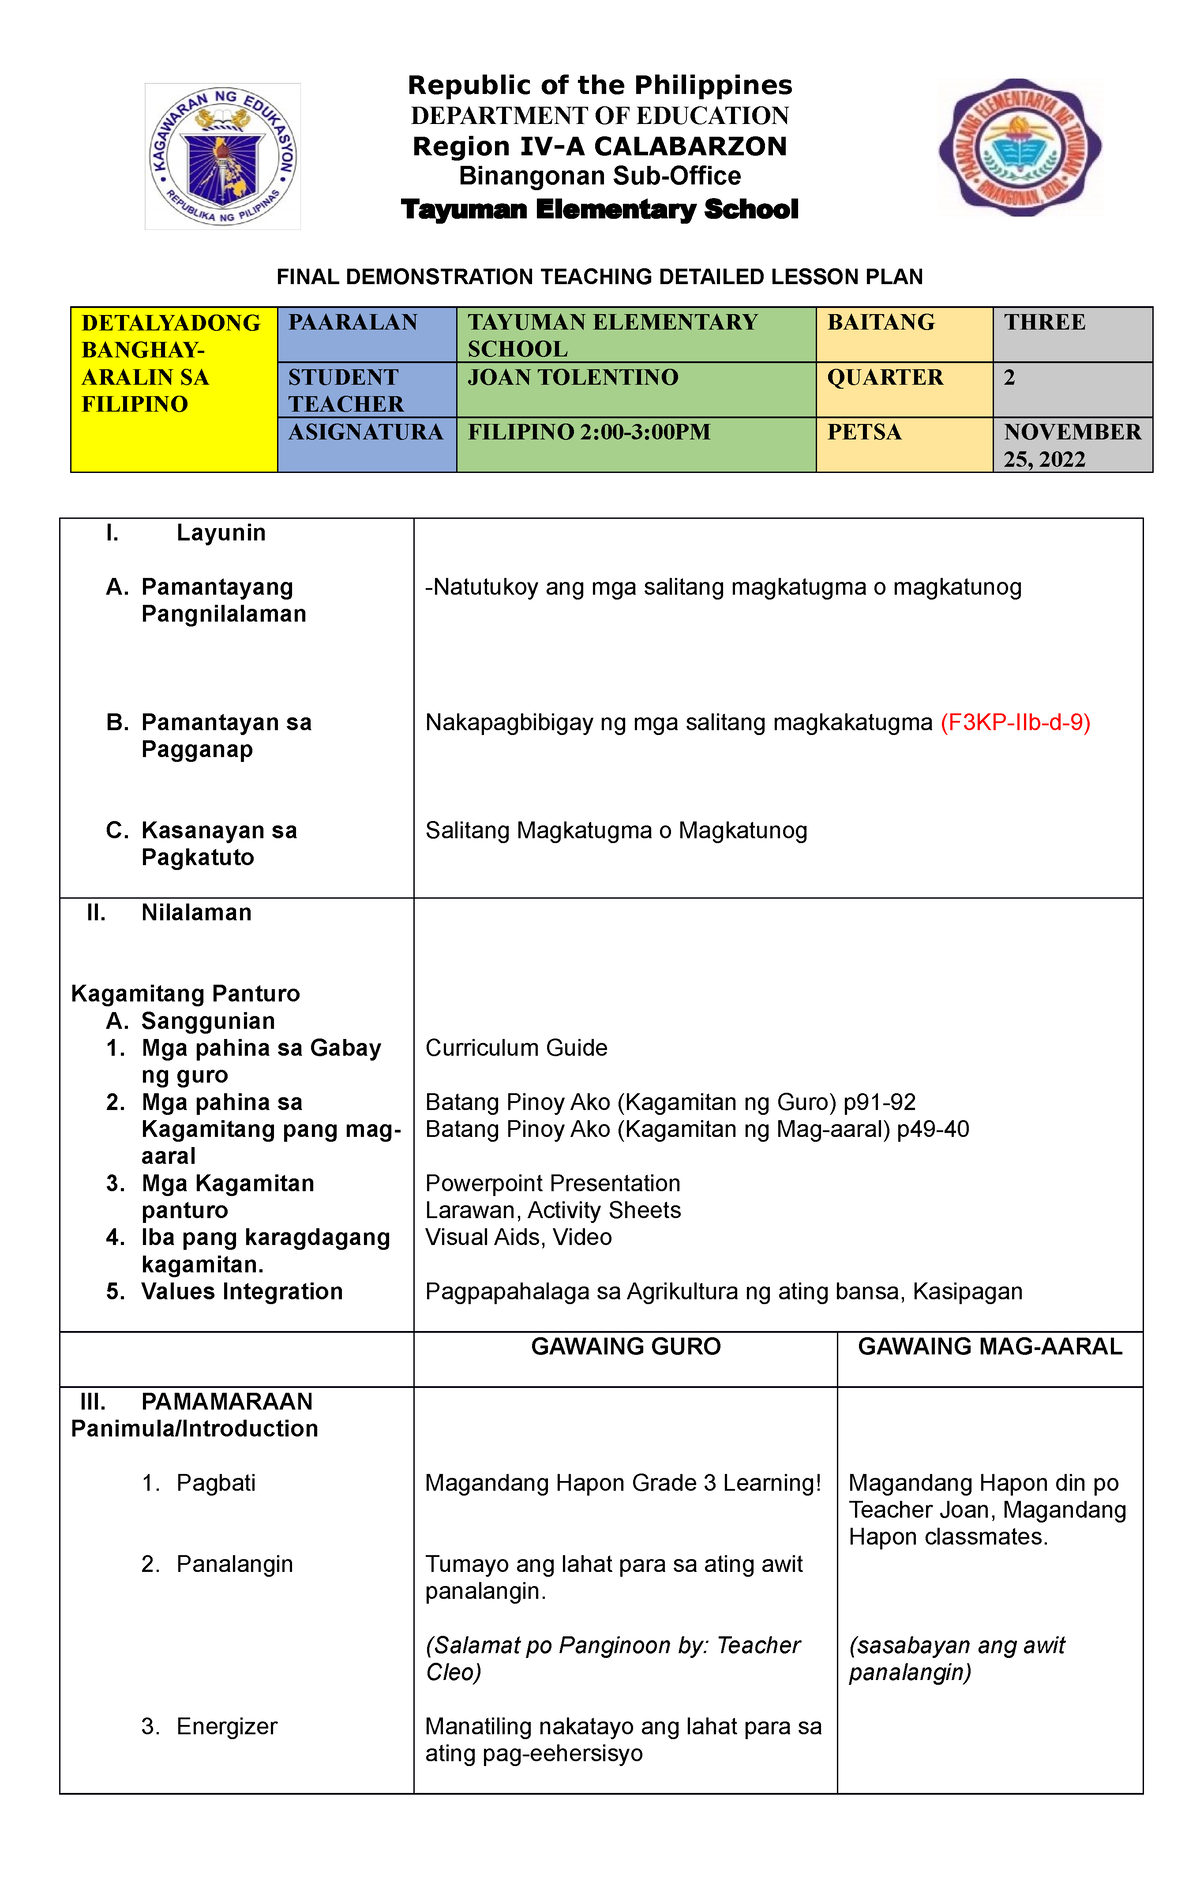 Lesson Plan Salitang Kilos Docx Banghay Aralin Sa Fi Morespics 0941